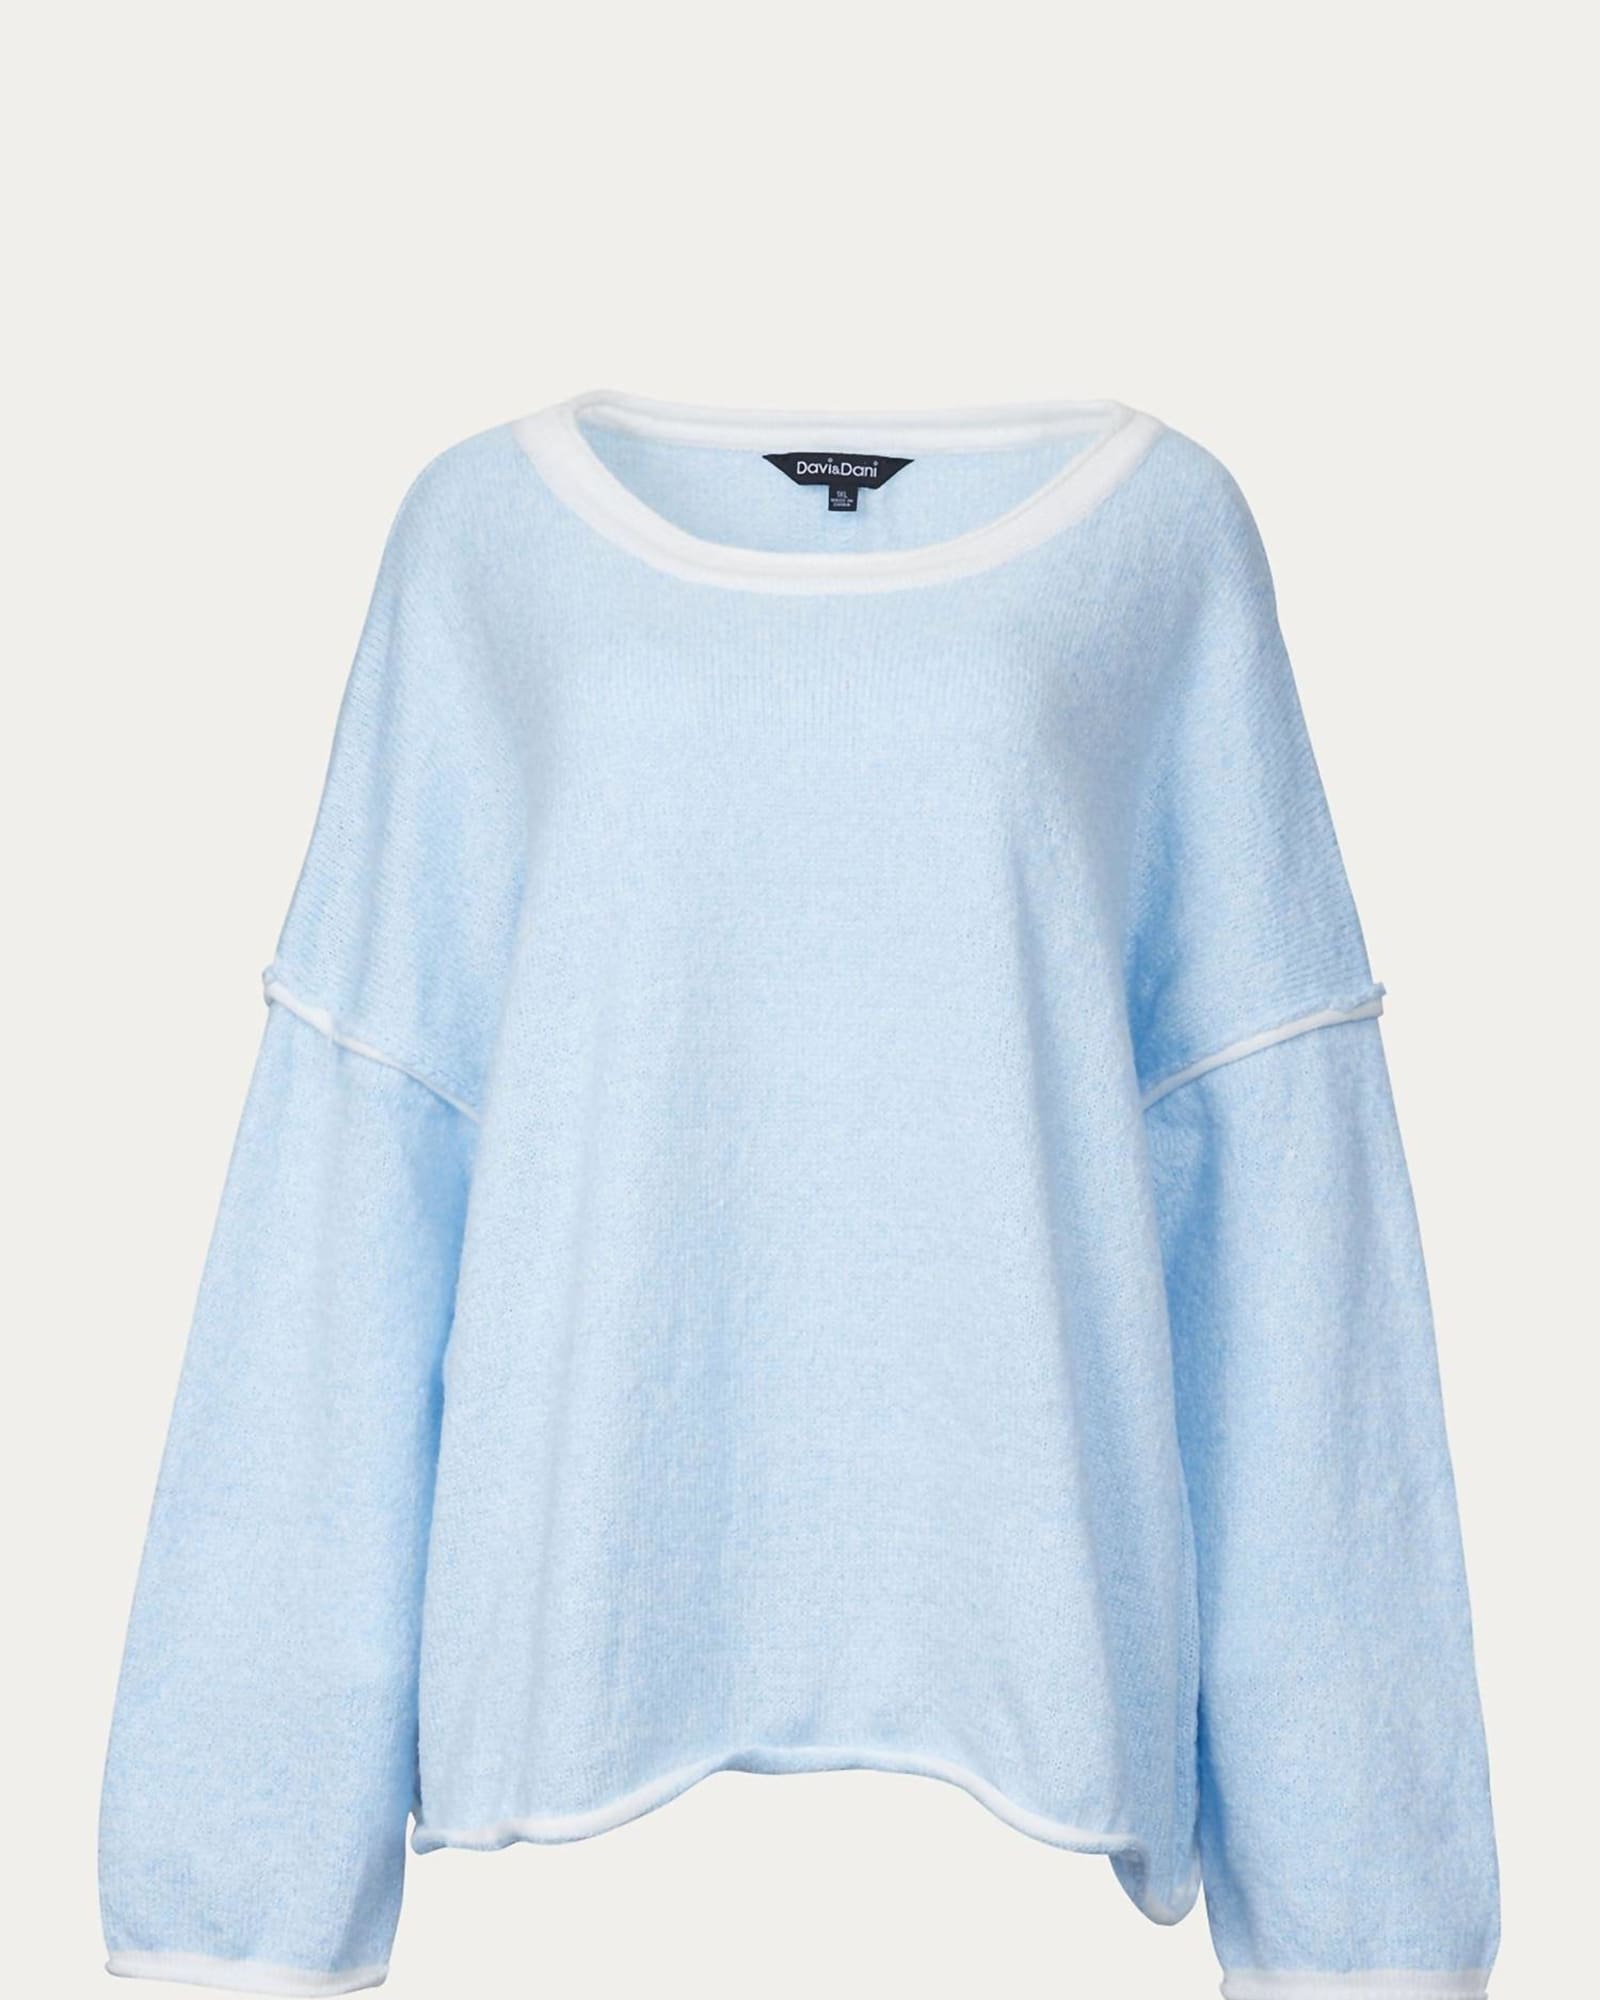 Plus Size Light Blue Knit Sweater